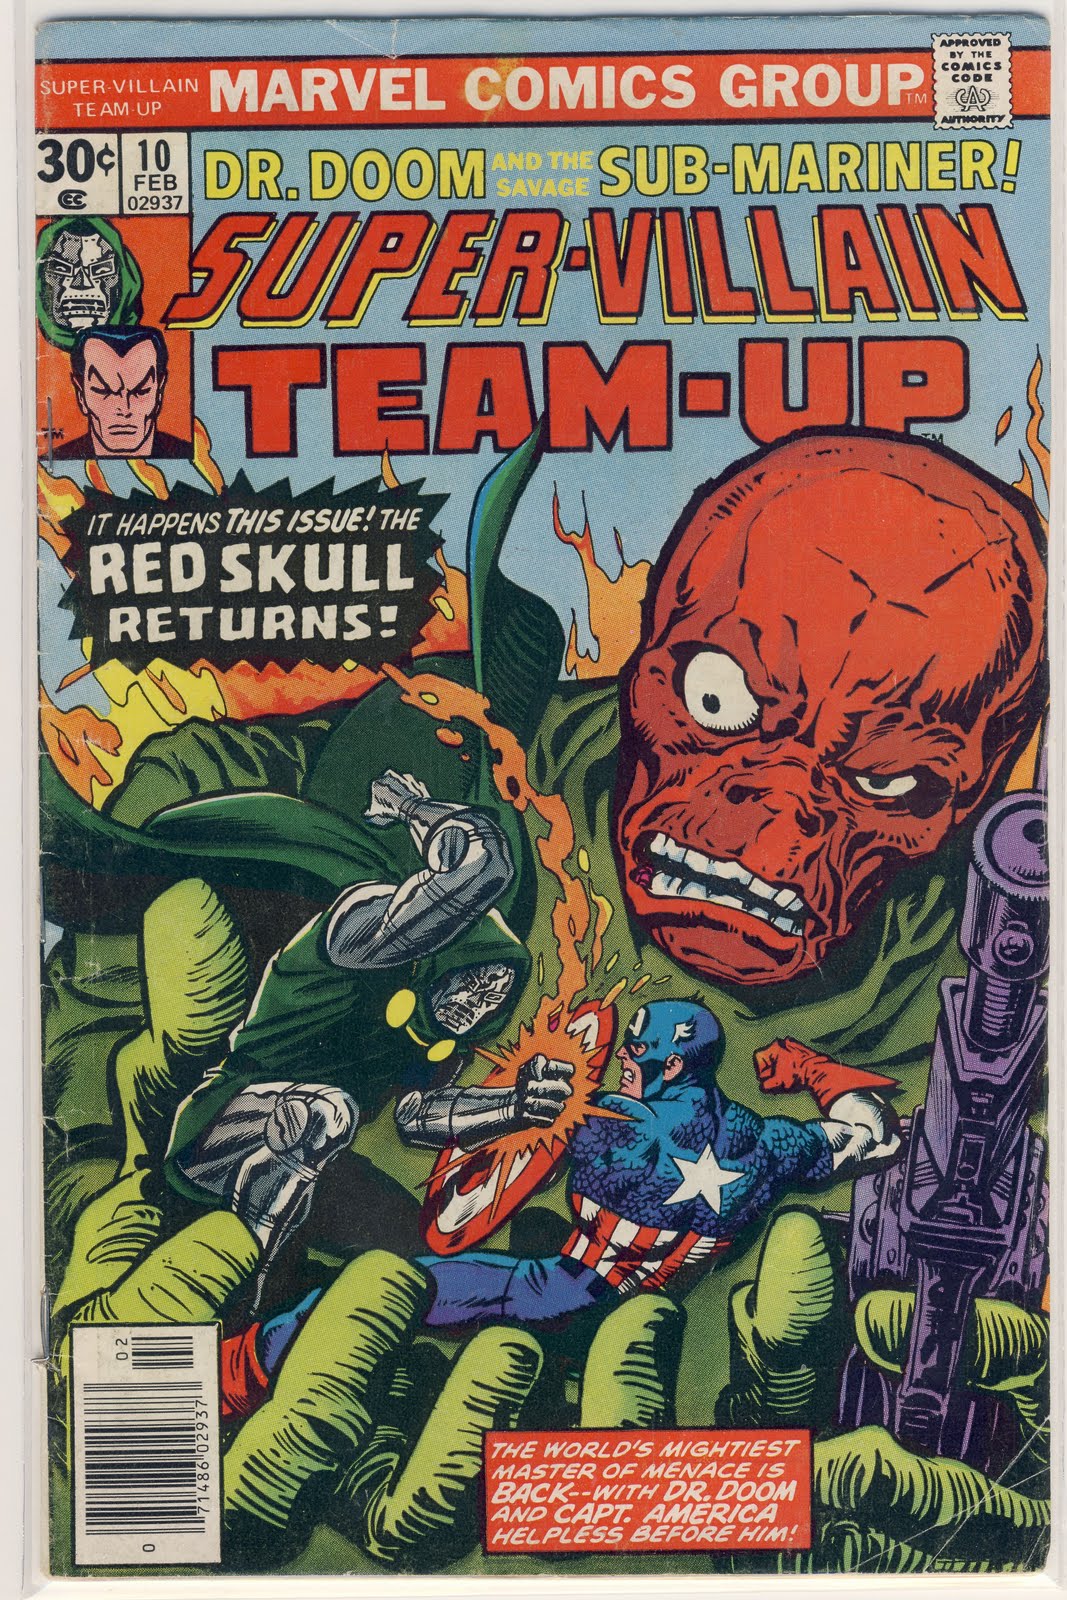 Super-Villain+Team-Up+%2310+(February+1977).jpg